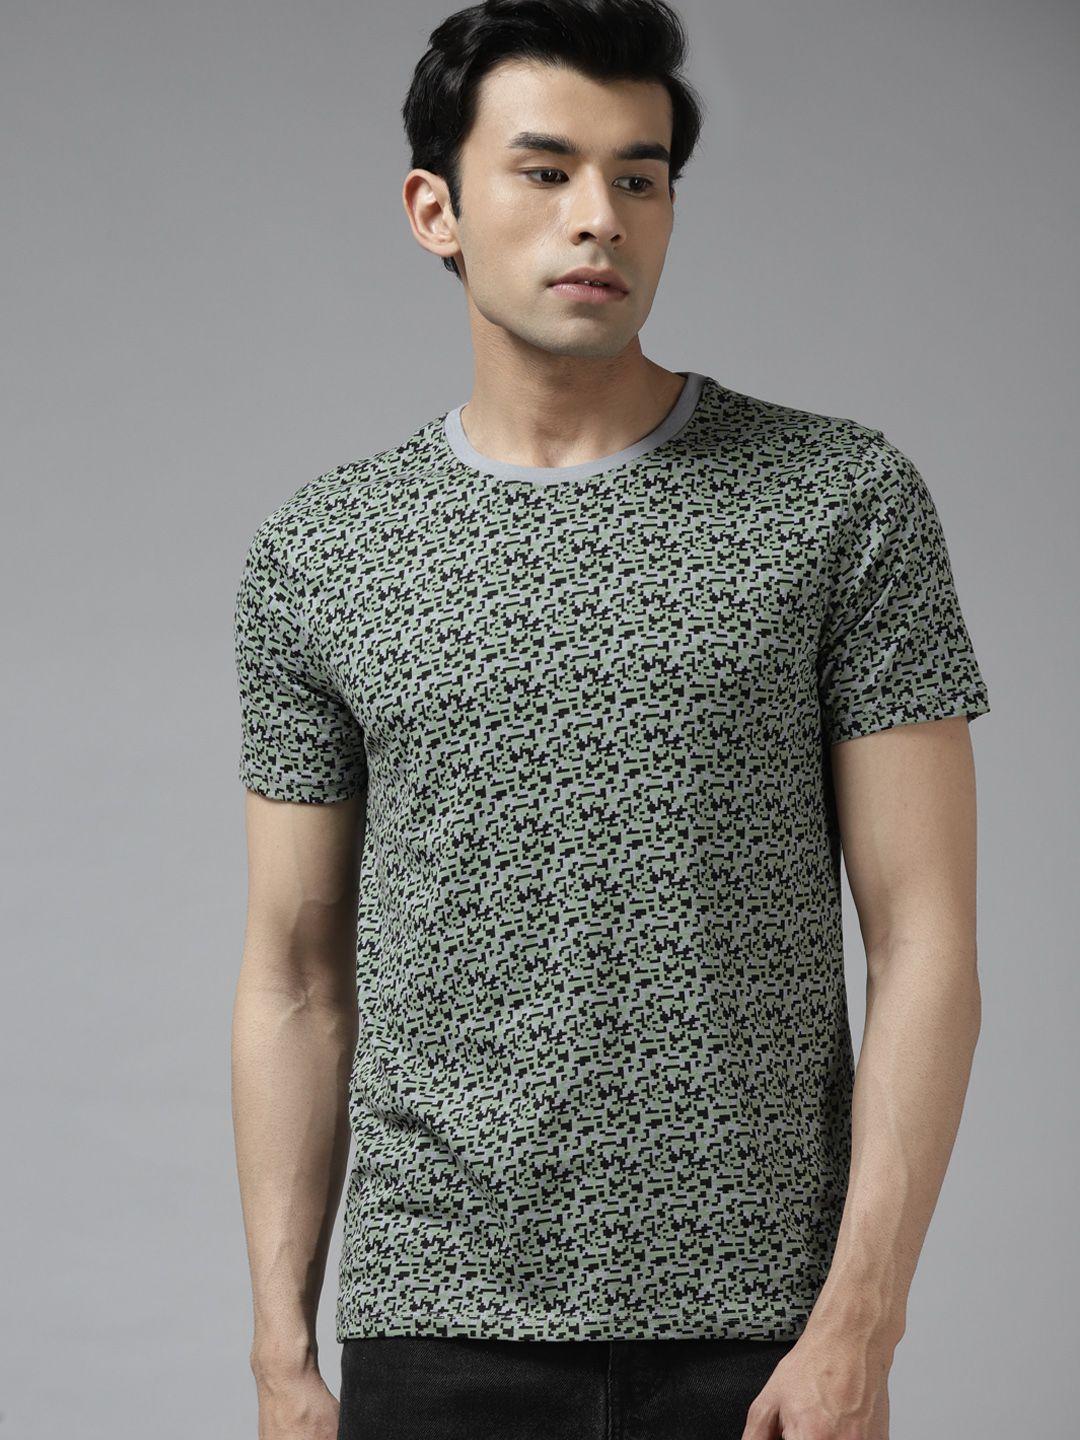 v dot men green & black abstract printed pure cotton t-shirt